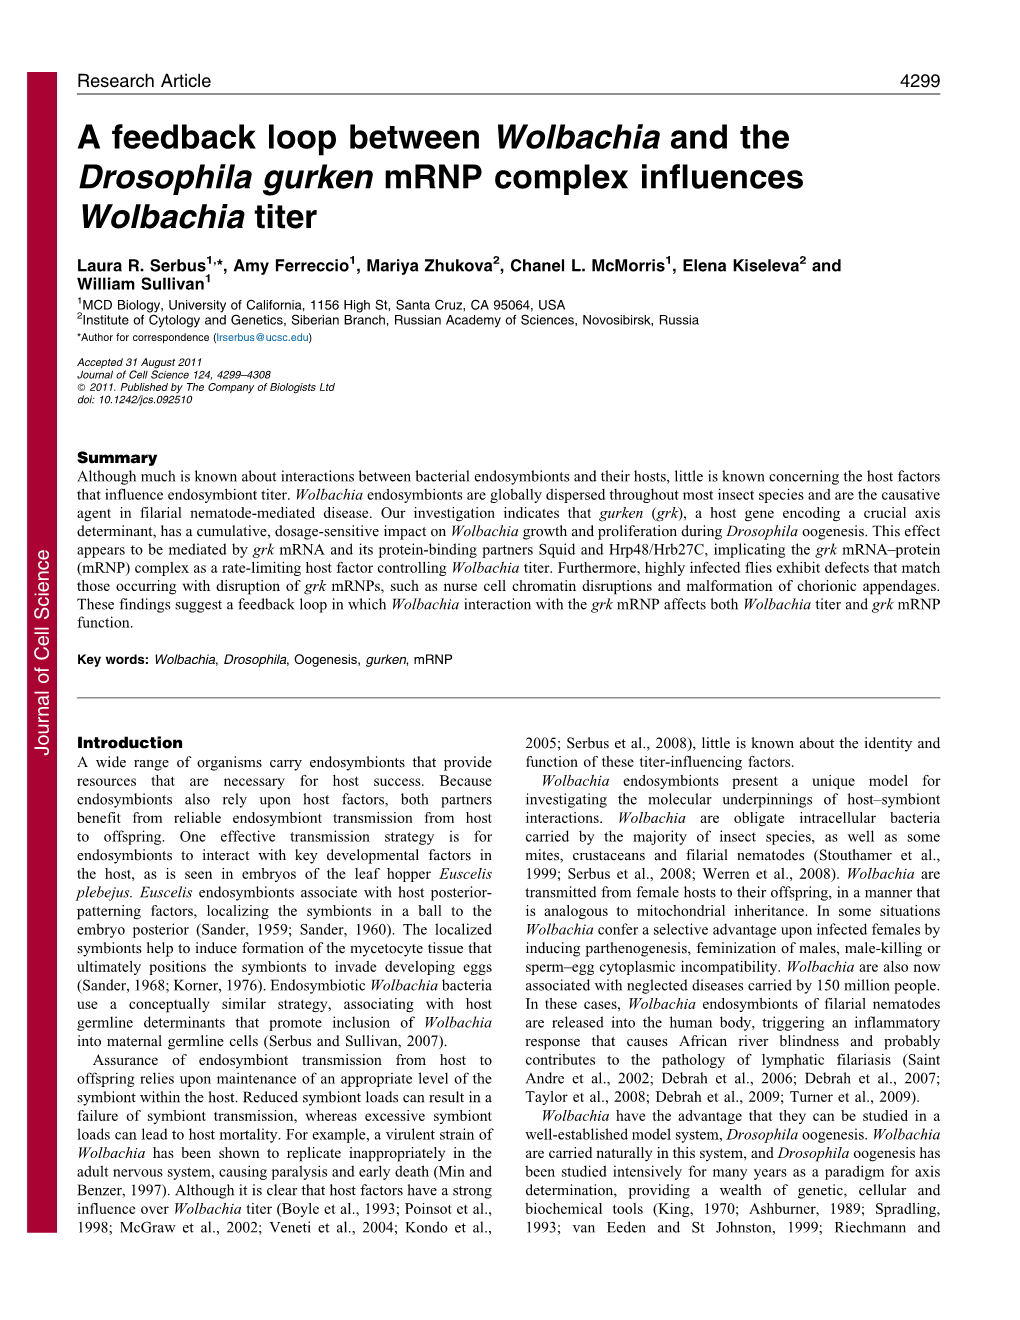 A Feedback Loop Between Wolbachia and the Drosophila Gurken Mrnp Complex Influences Wolbachia Titer